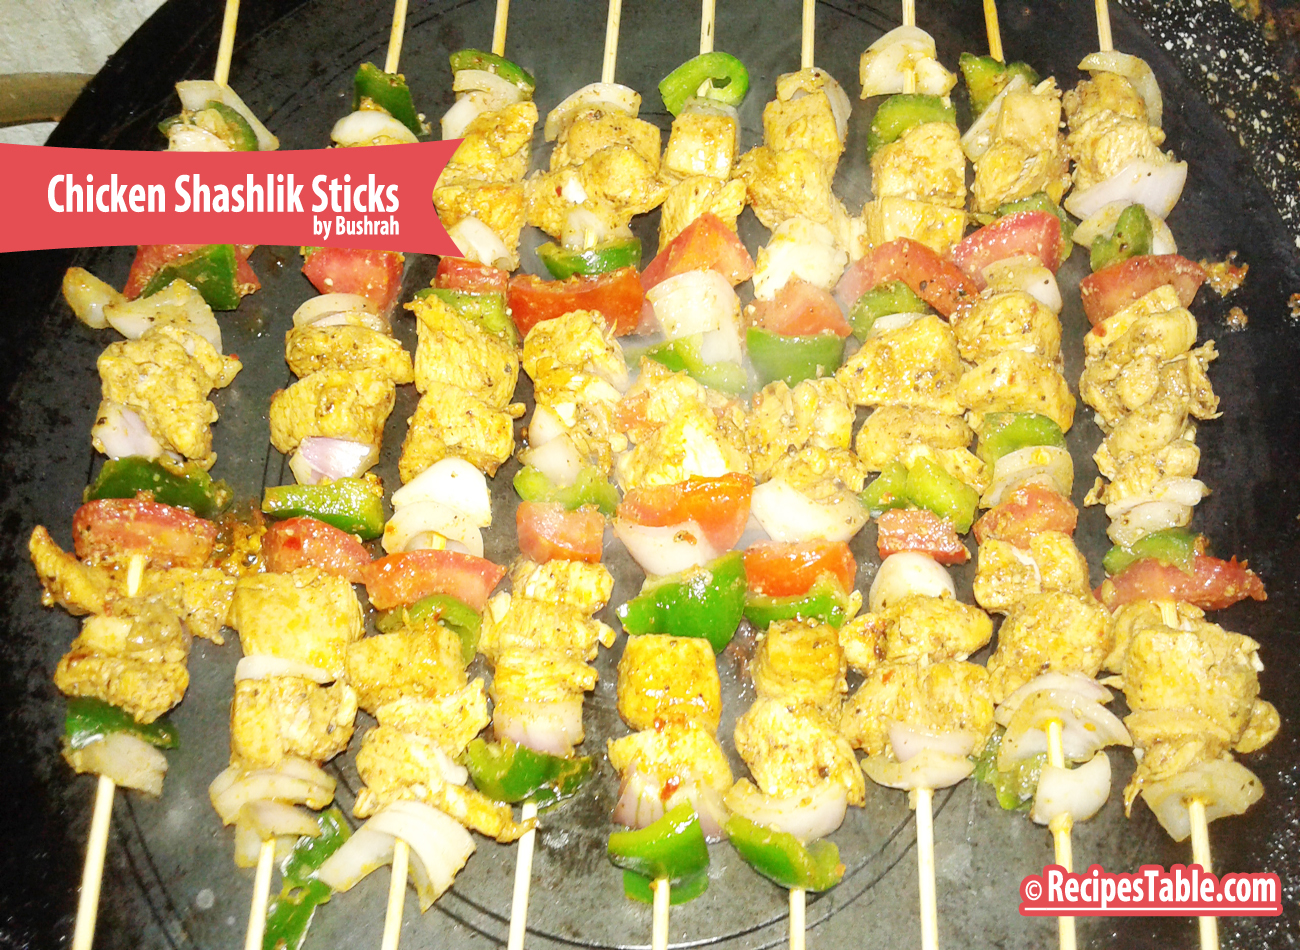 Chicken Shashlik Sticks recipe